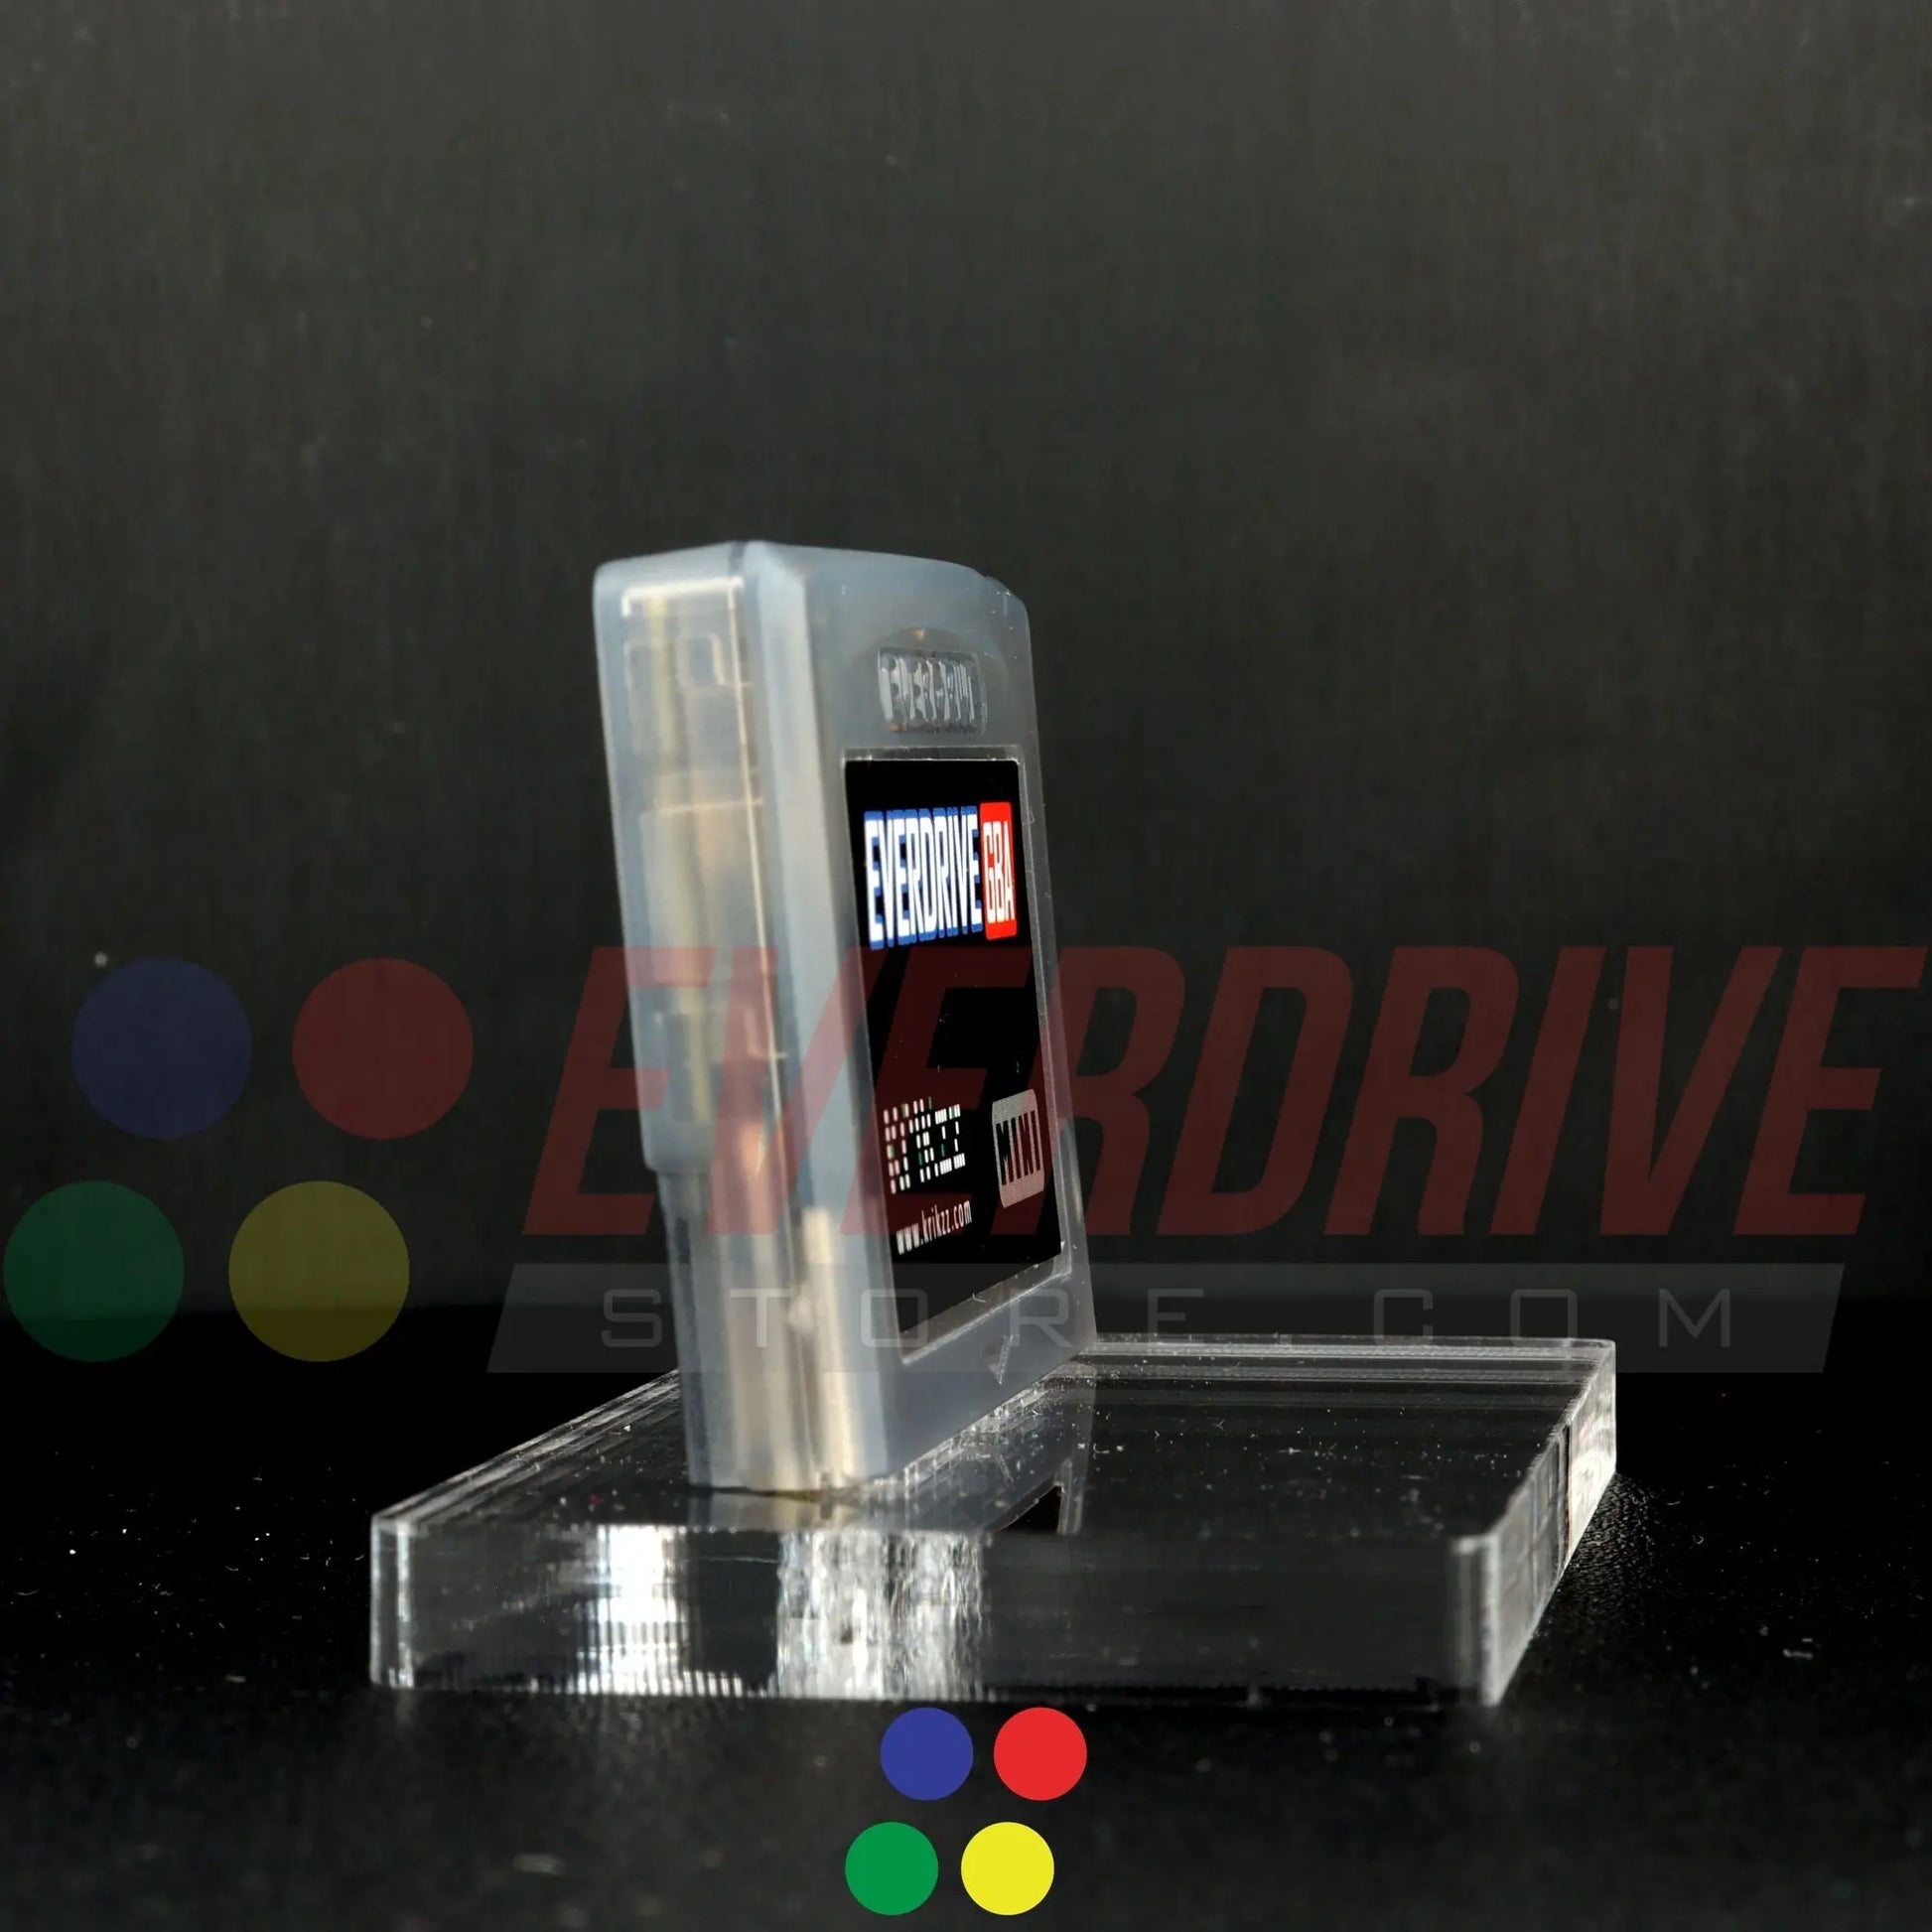 Everdrive GBA Mini - Frosted Black Krikzz